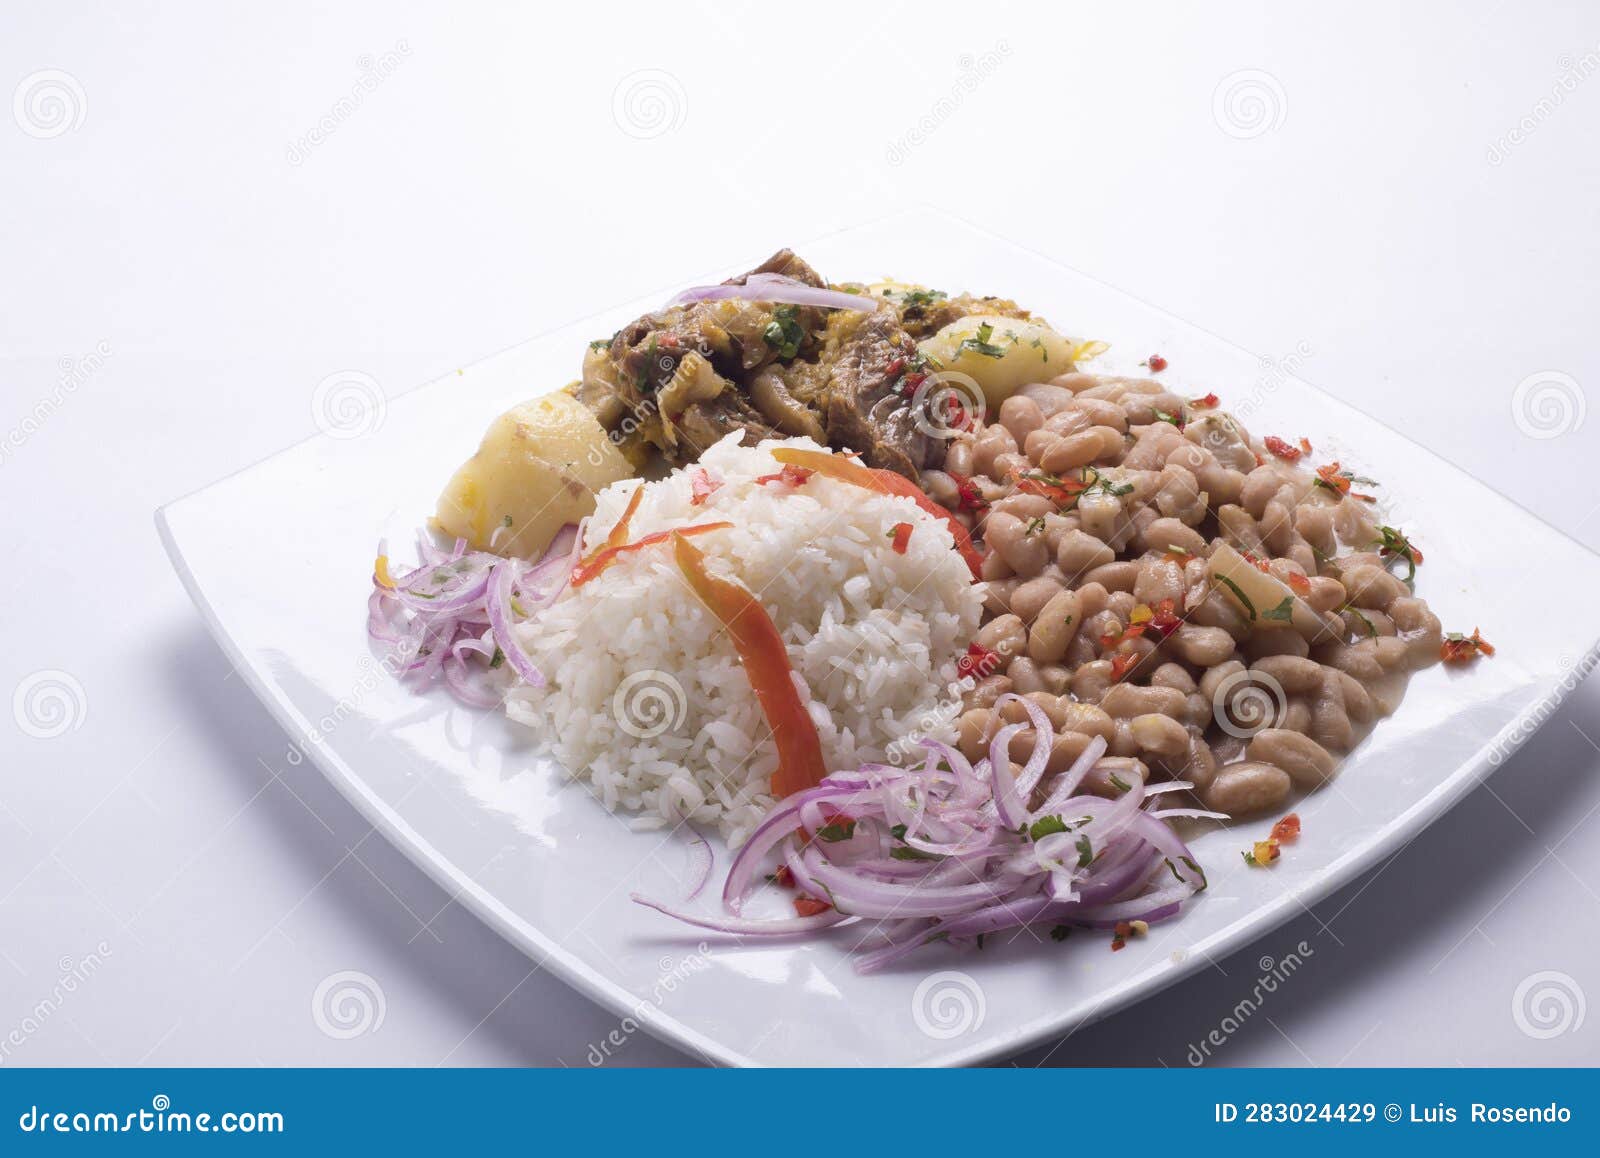 seco de cabrito,peruvian food rice with beans